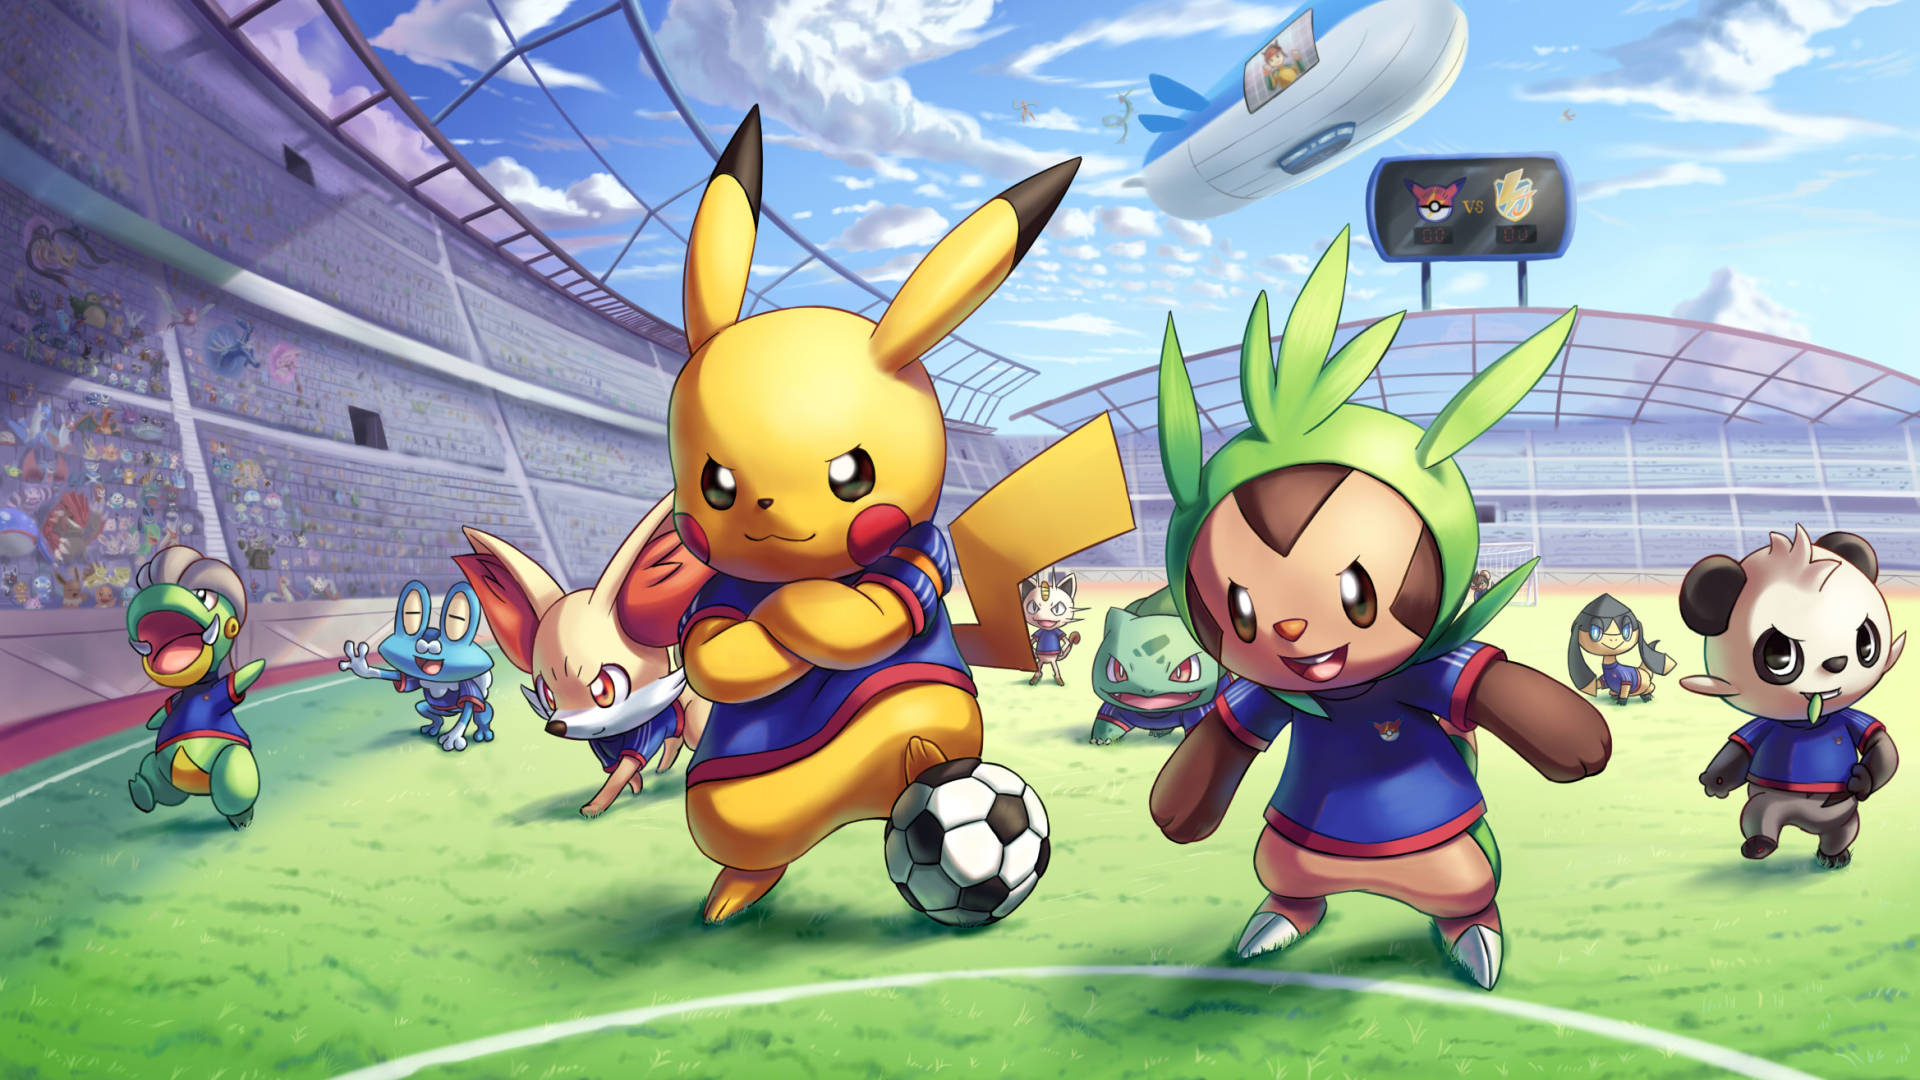 1920 X 1080 Anime Pokémon Soccer Match Wallpaper